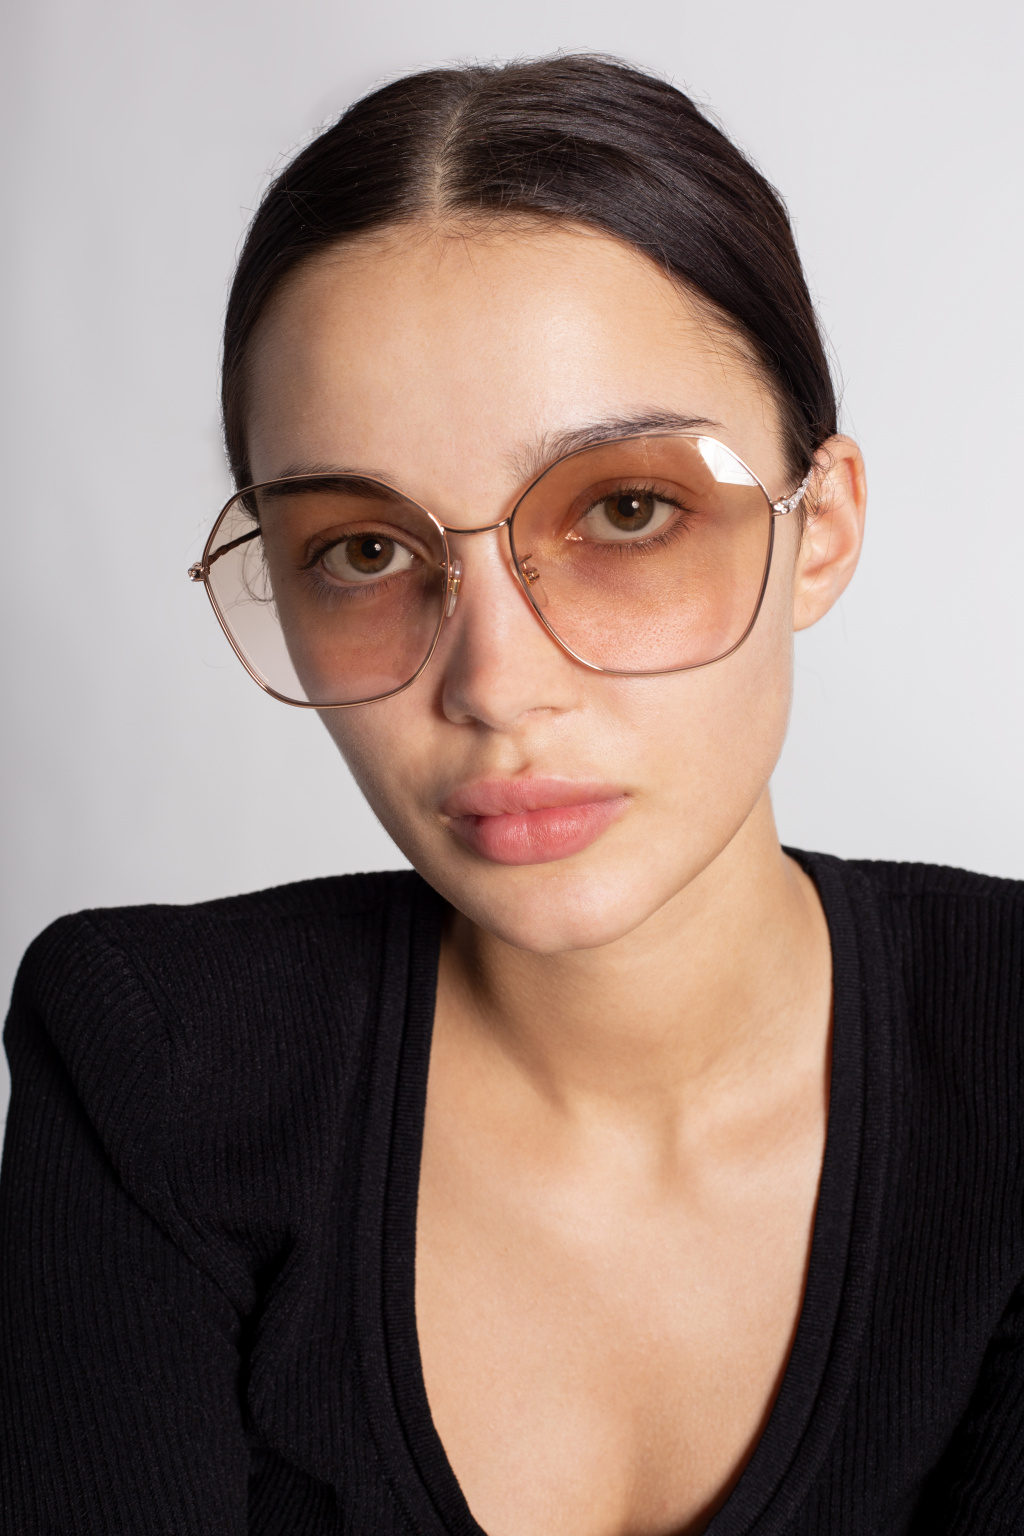 Givenchy Crystal-encrusted SL214 sunglasses